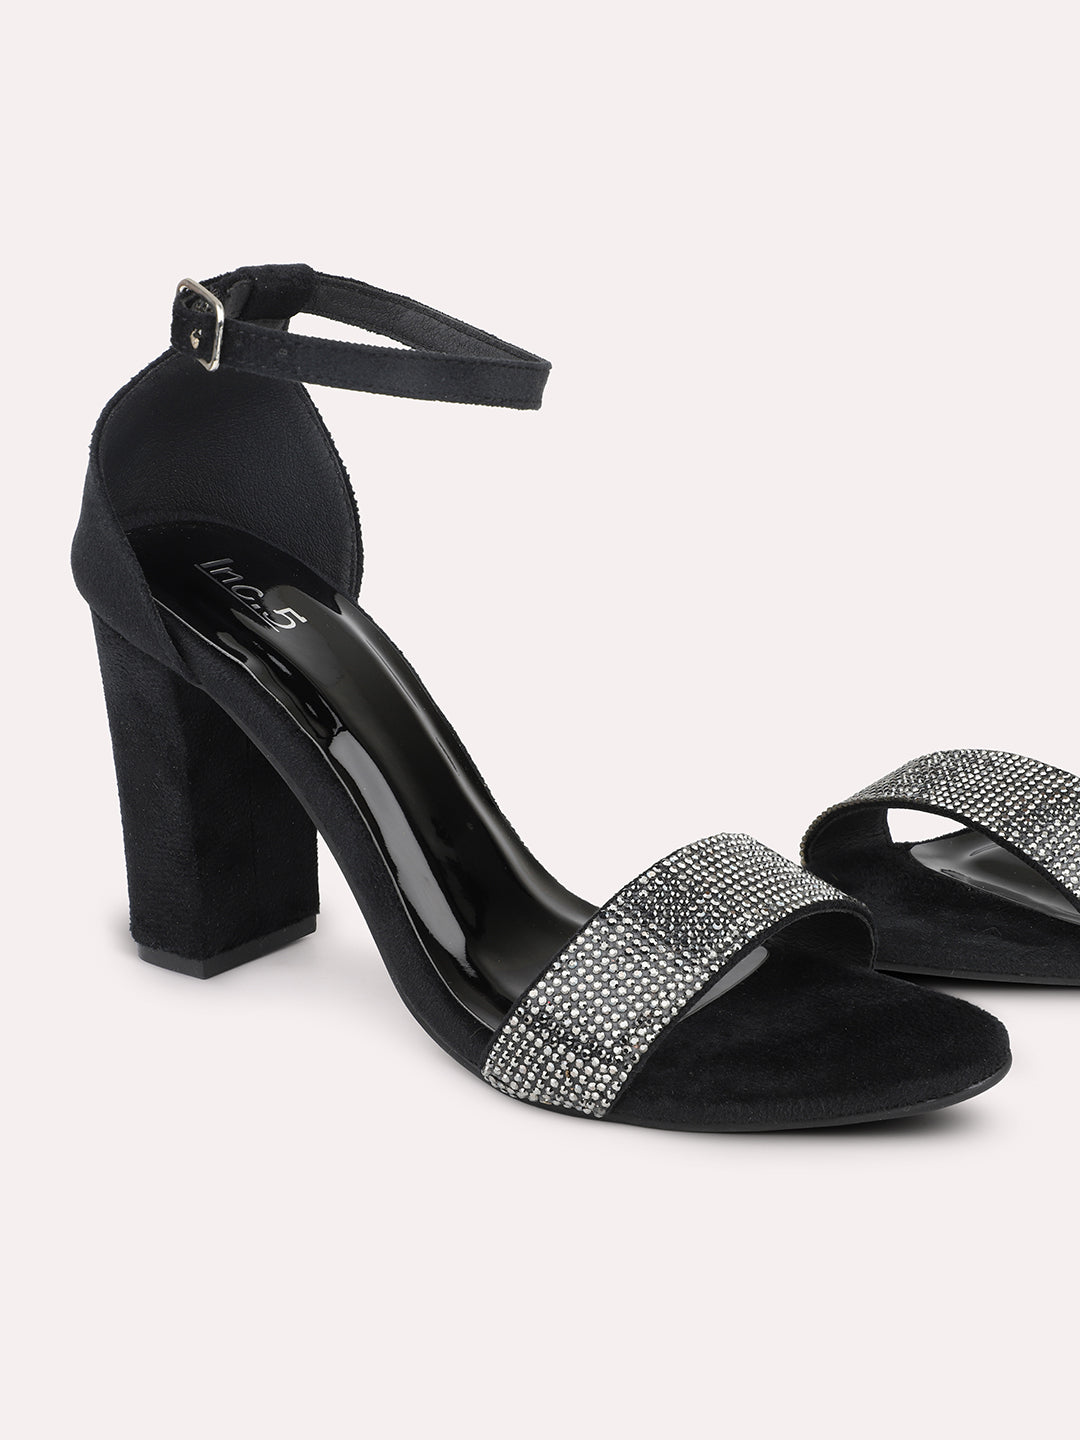 Inc.5 Women's Black Fashion Sandals - 7 UK/India (40 EU)(12010BLCK) :  Amazon.in: Shoes & Handbags